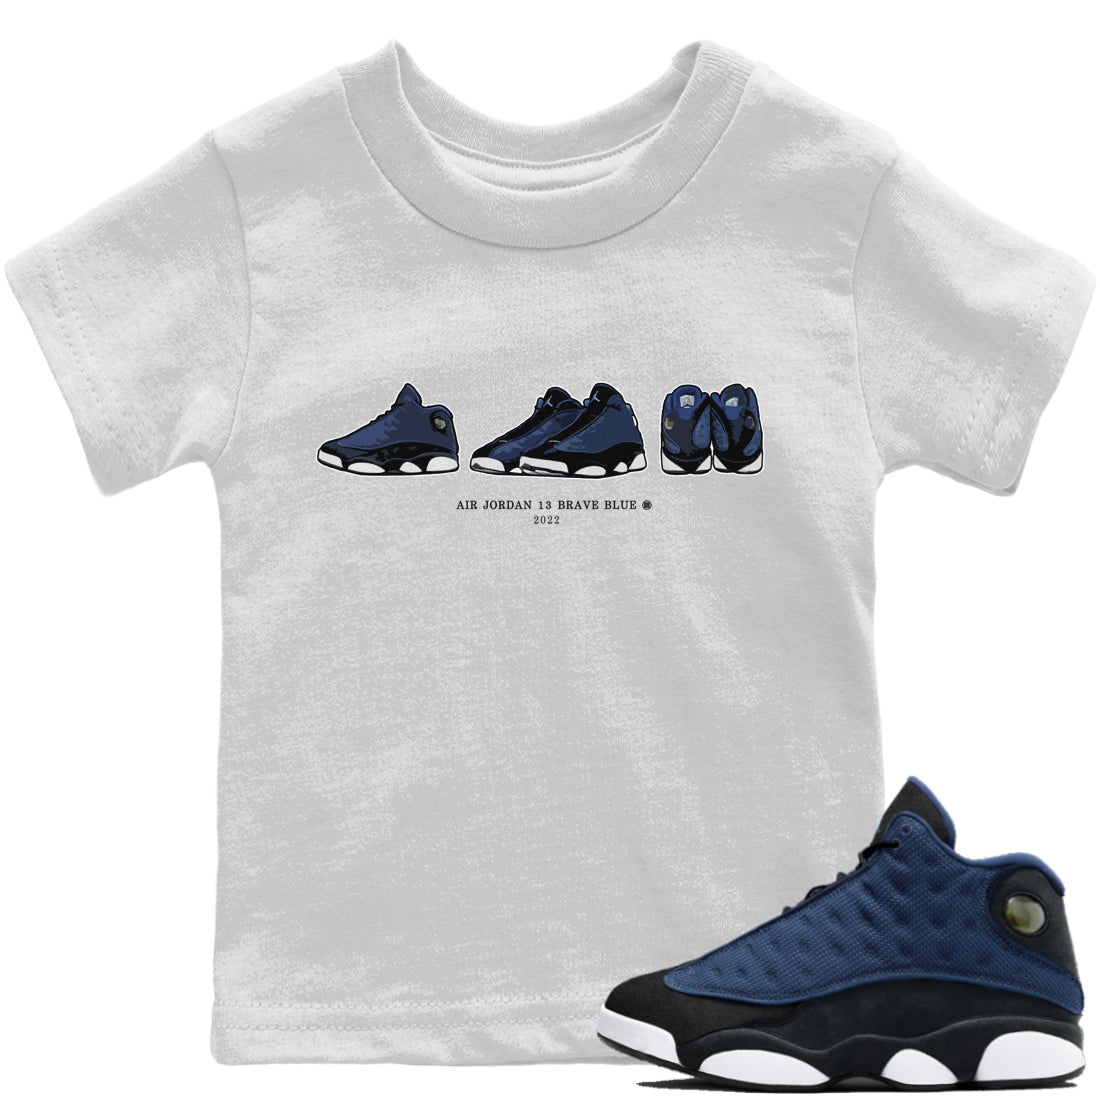 Jordan 13 Brave Blue Sneaker Match Tees Air Jordan 13 Prelude Sneaker Tees Jordan 13 Brave Blue Sneaker Release Tees Kids Shirts